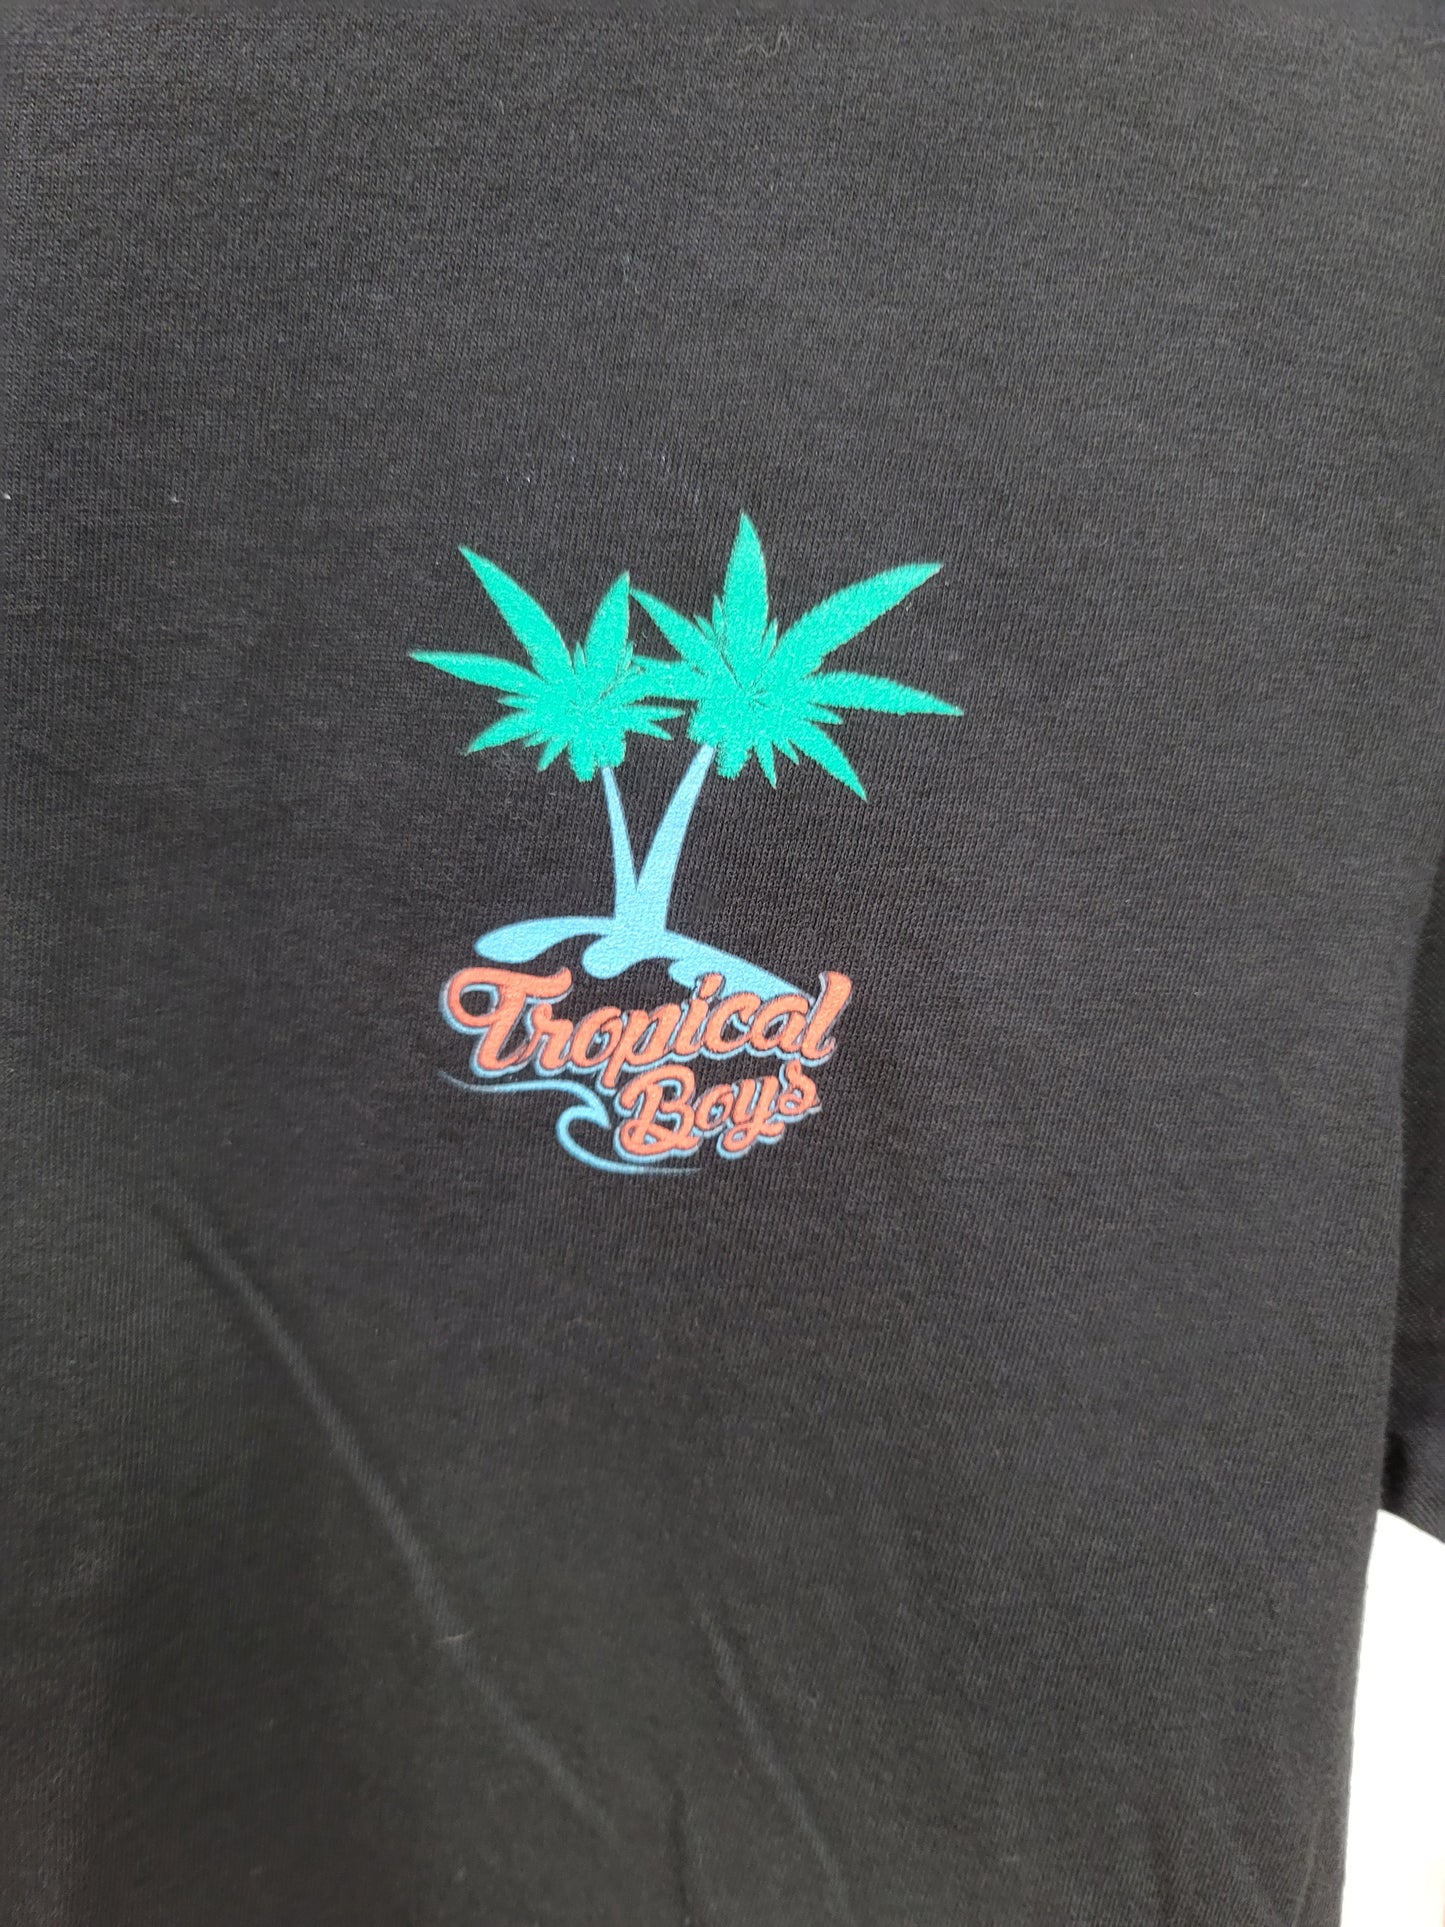 Tropical Boys Shirt Black Small